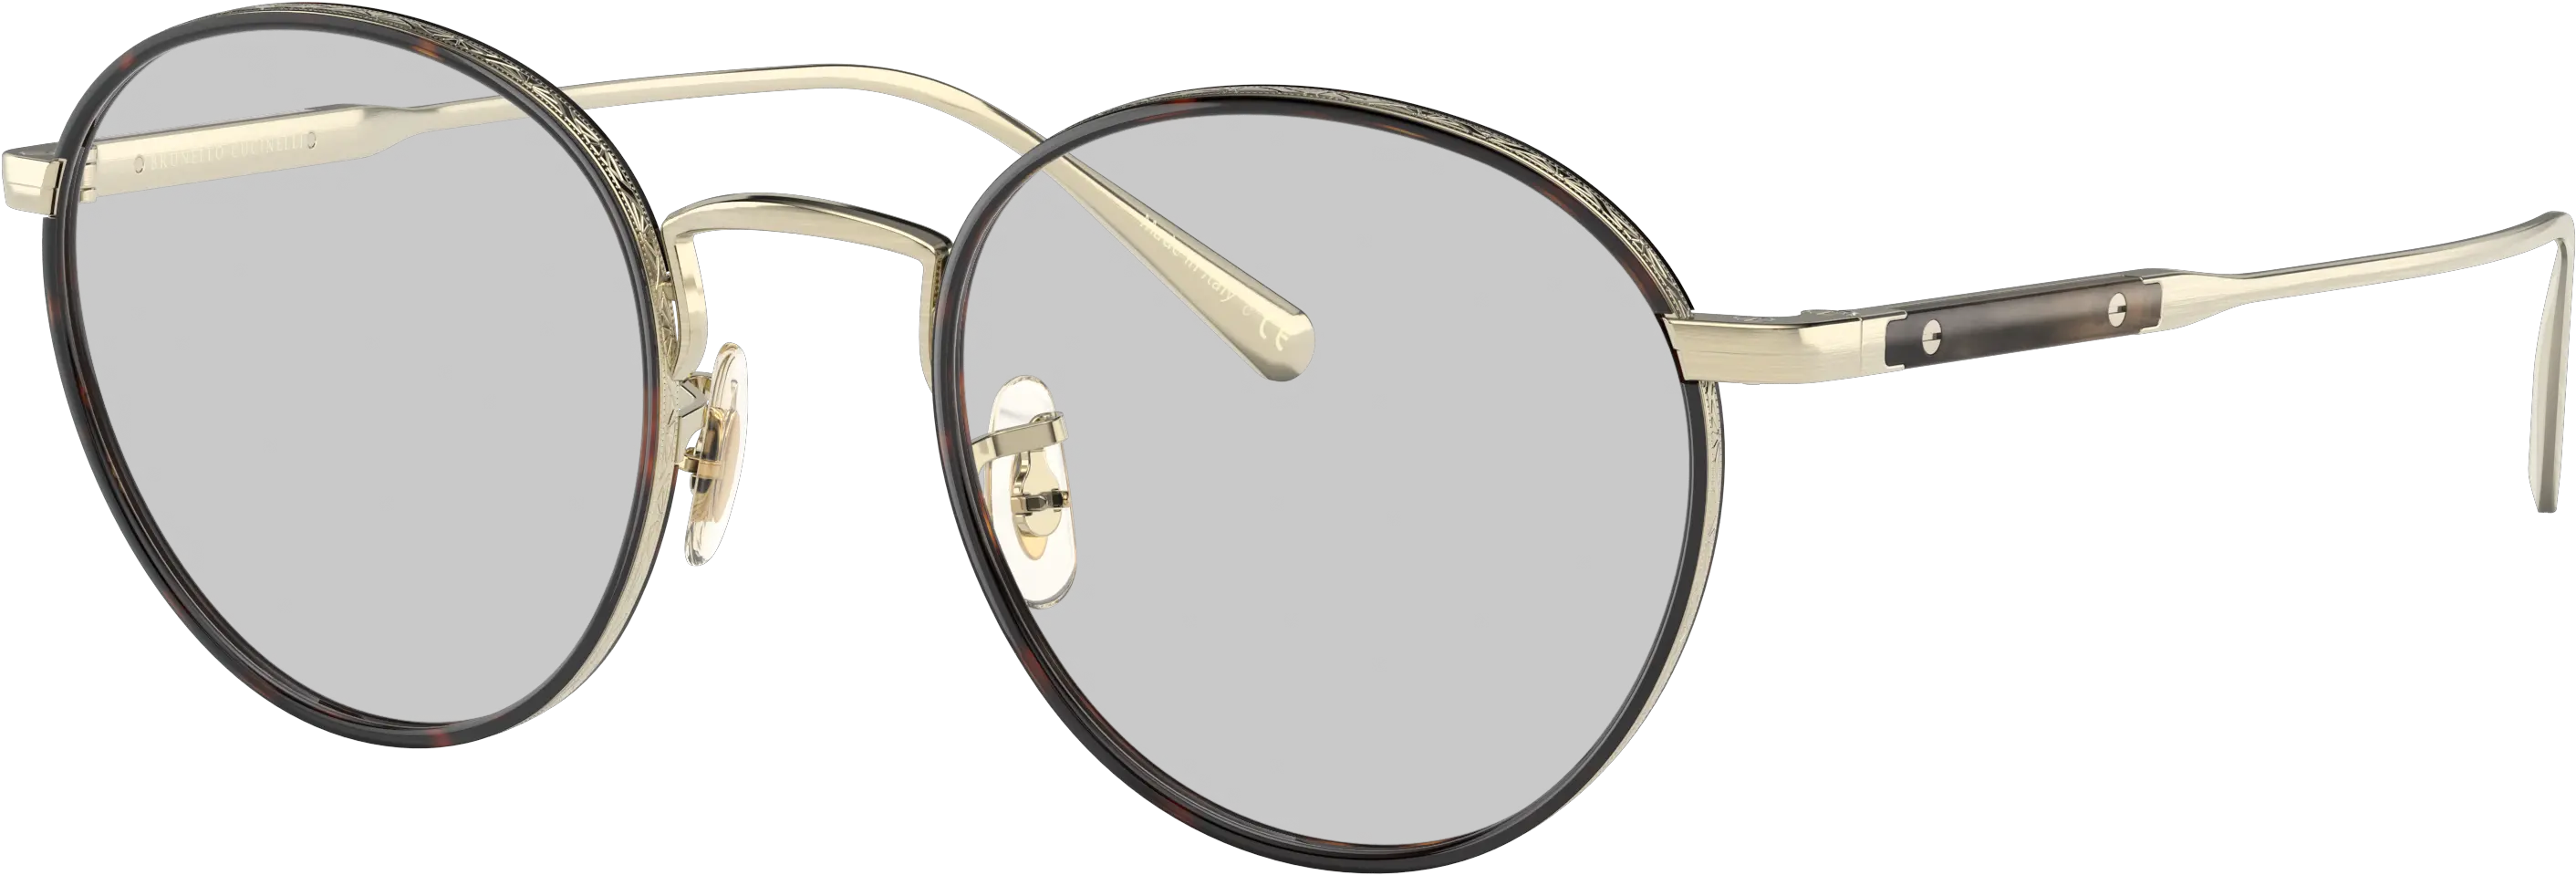 Oliver Artemio R Eyeglasses In Brushed Golddark Mahogany Full Rim Png Silhouette Glasses Tma Icon